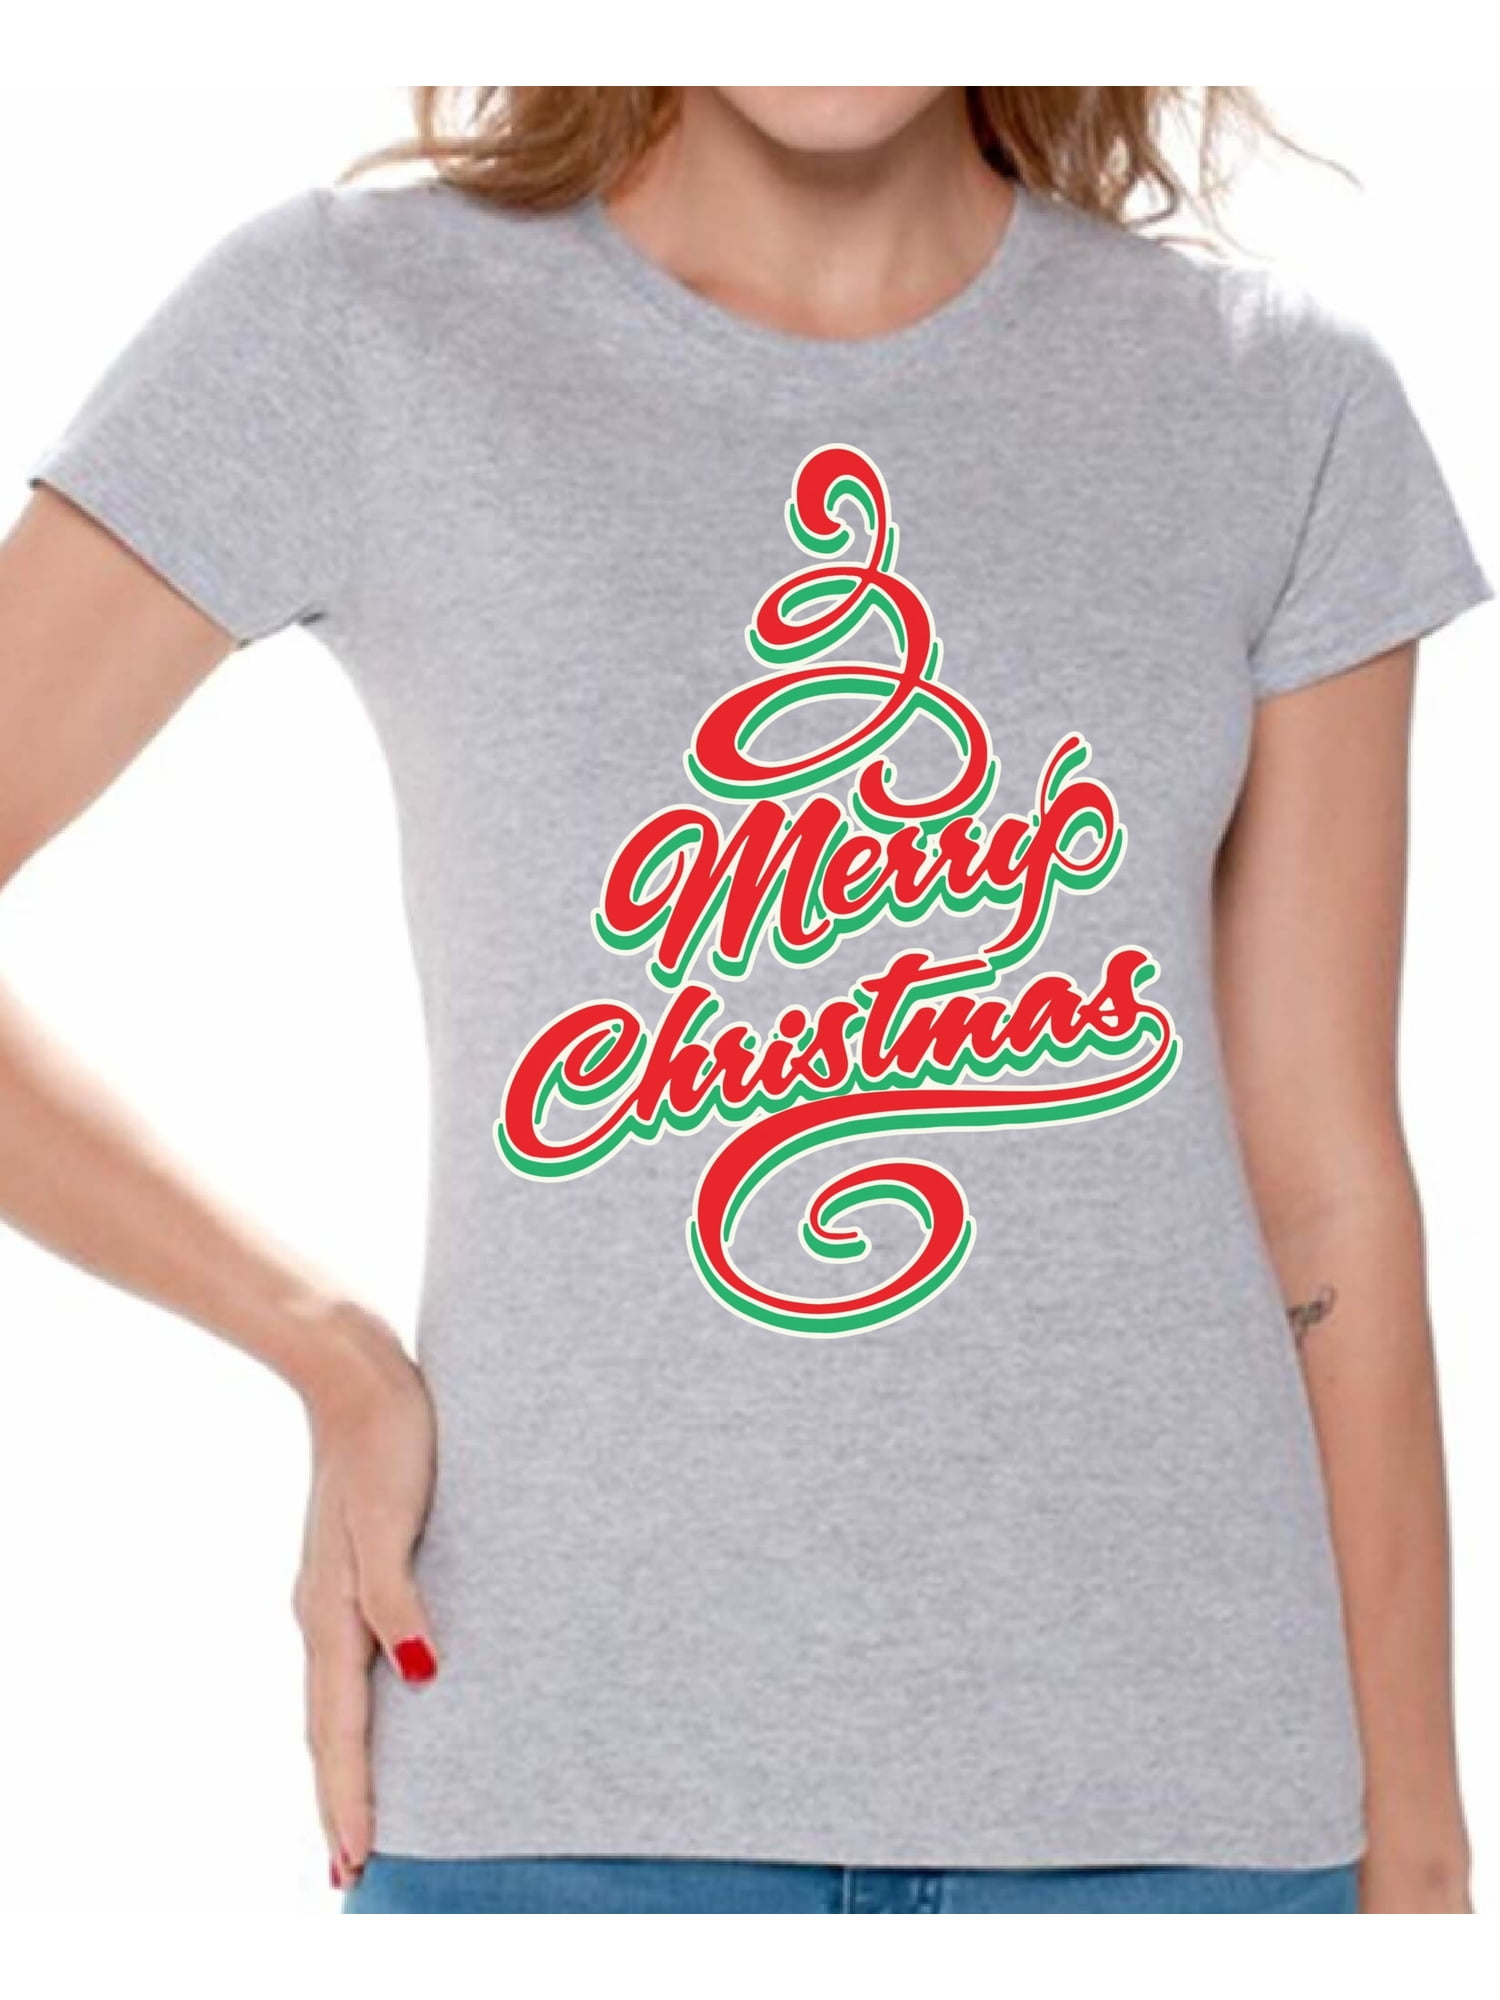 Christmas Believe Tree Shirt Cute Short Sleeve Christmas Graphic Tee Shirts Tops for Women Christmas Shirts